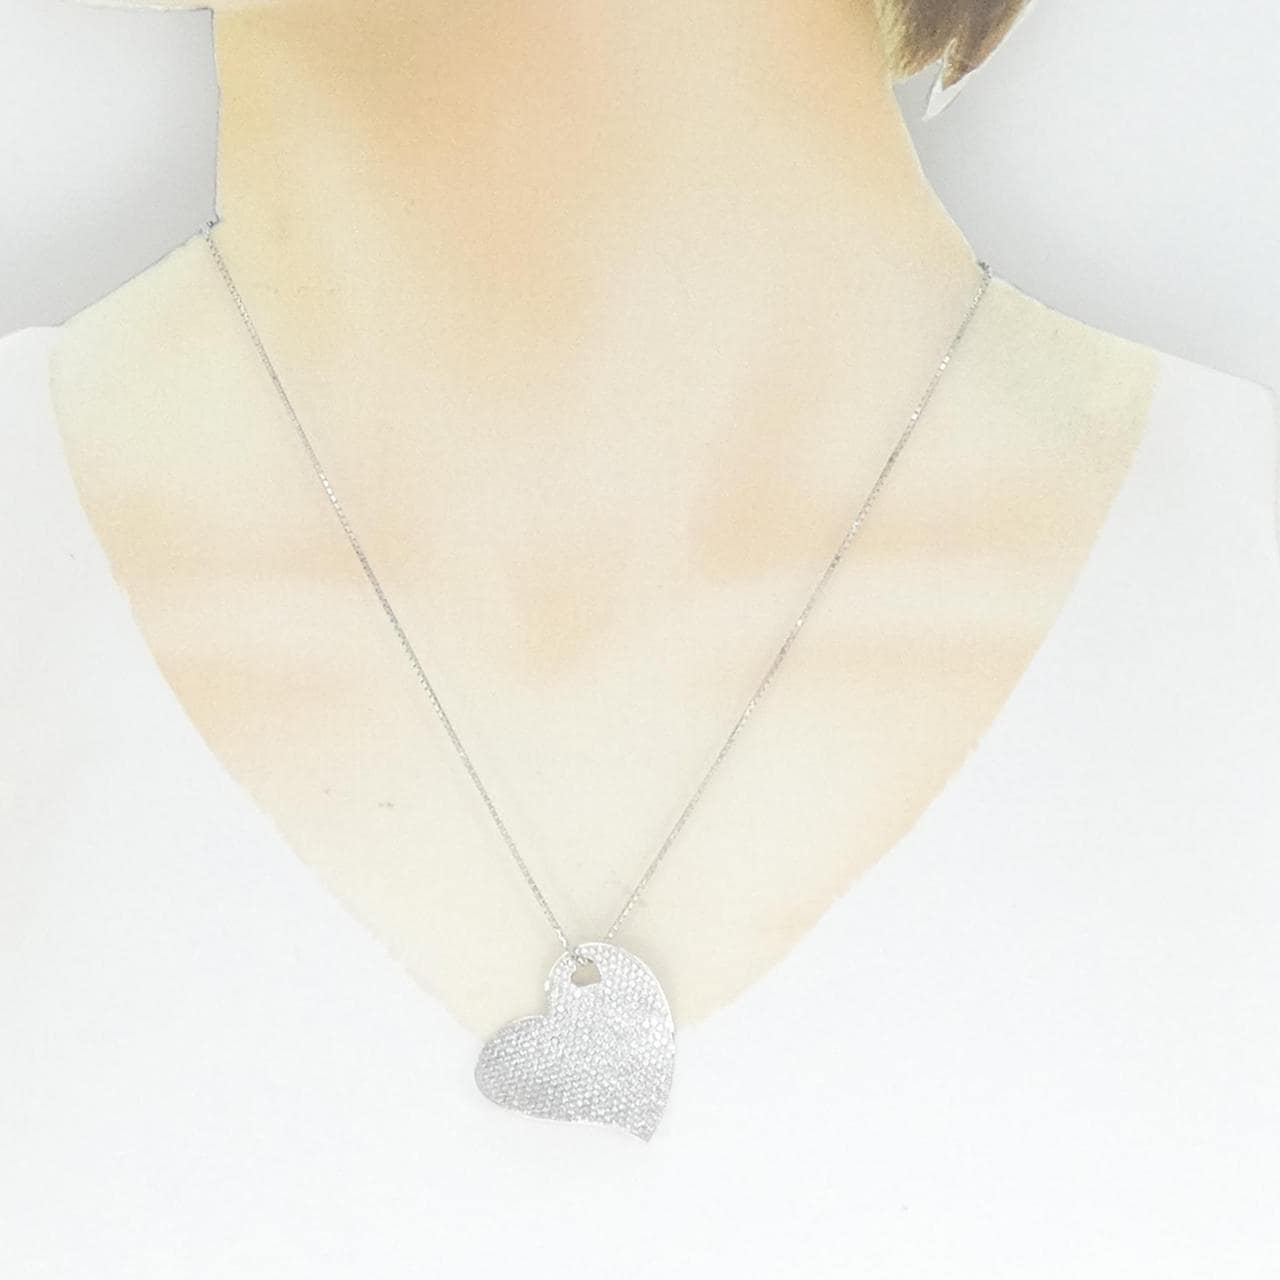 750WG/K18WG Pave Heart Diamond Necklace 2.10CT